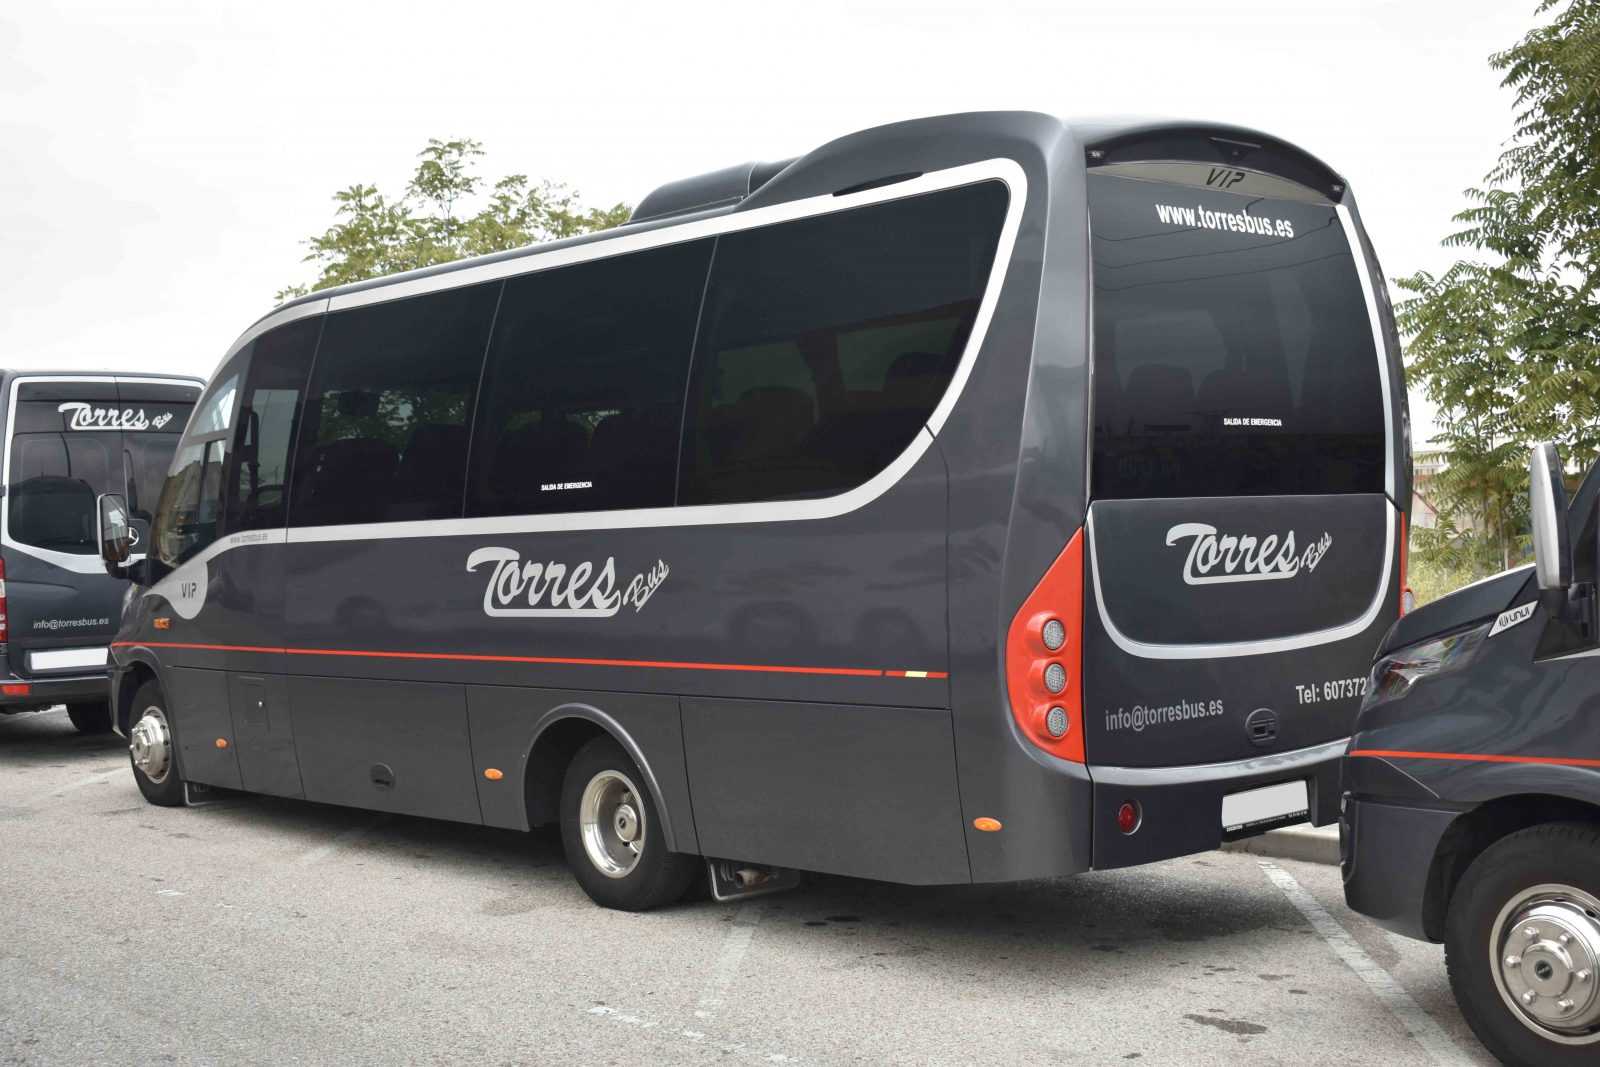 Minibus rental for 25 luxury people